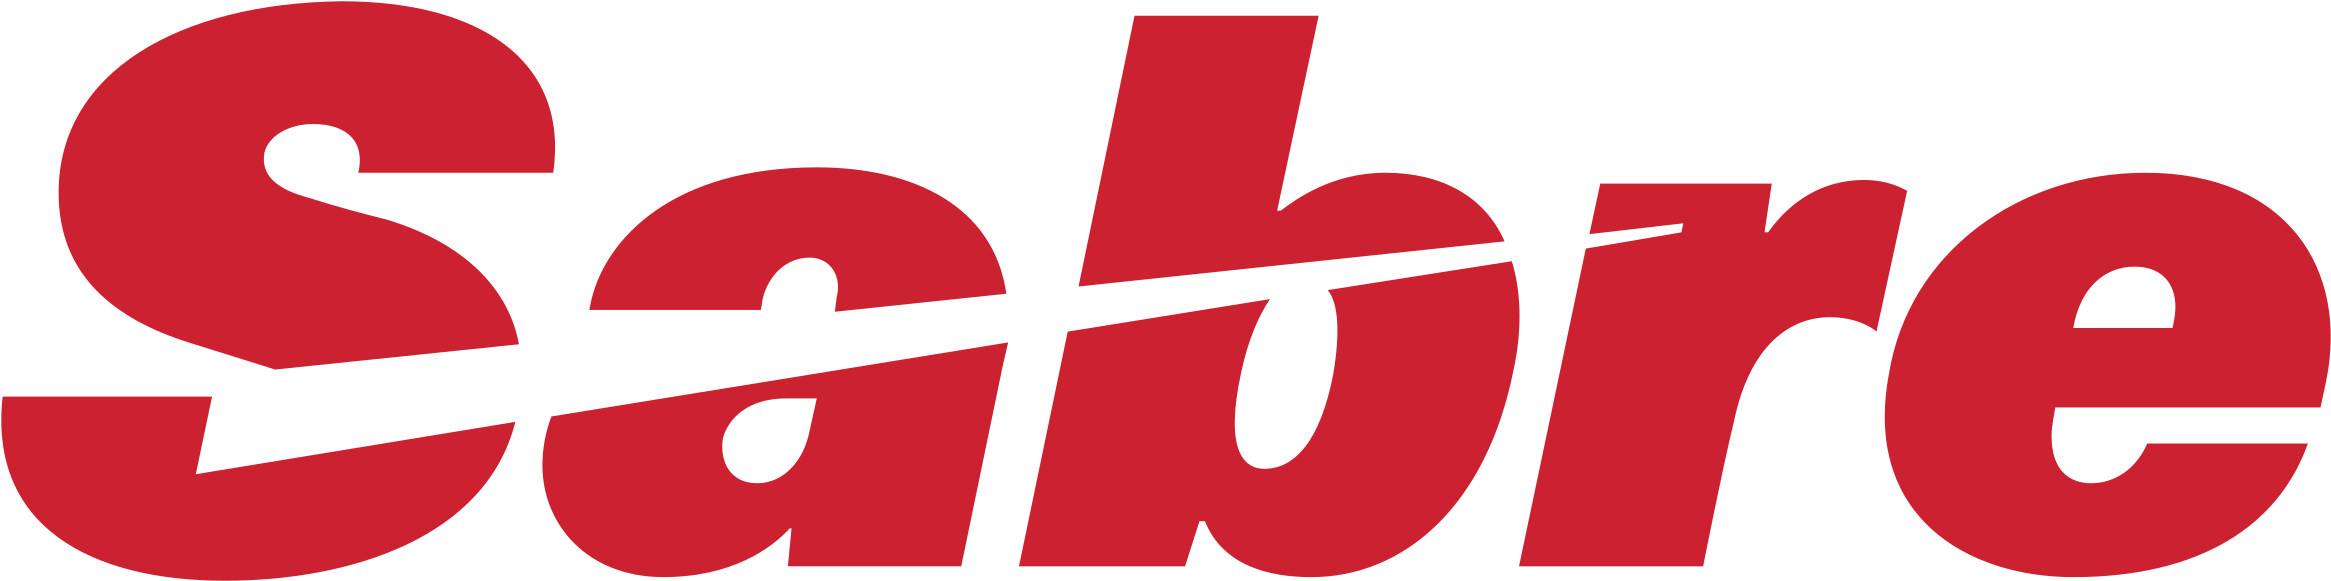 sabre travel network logo